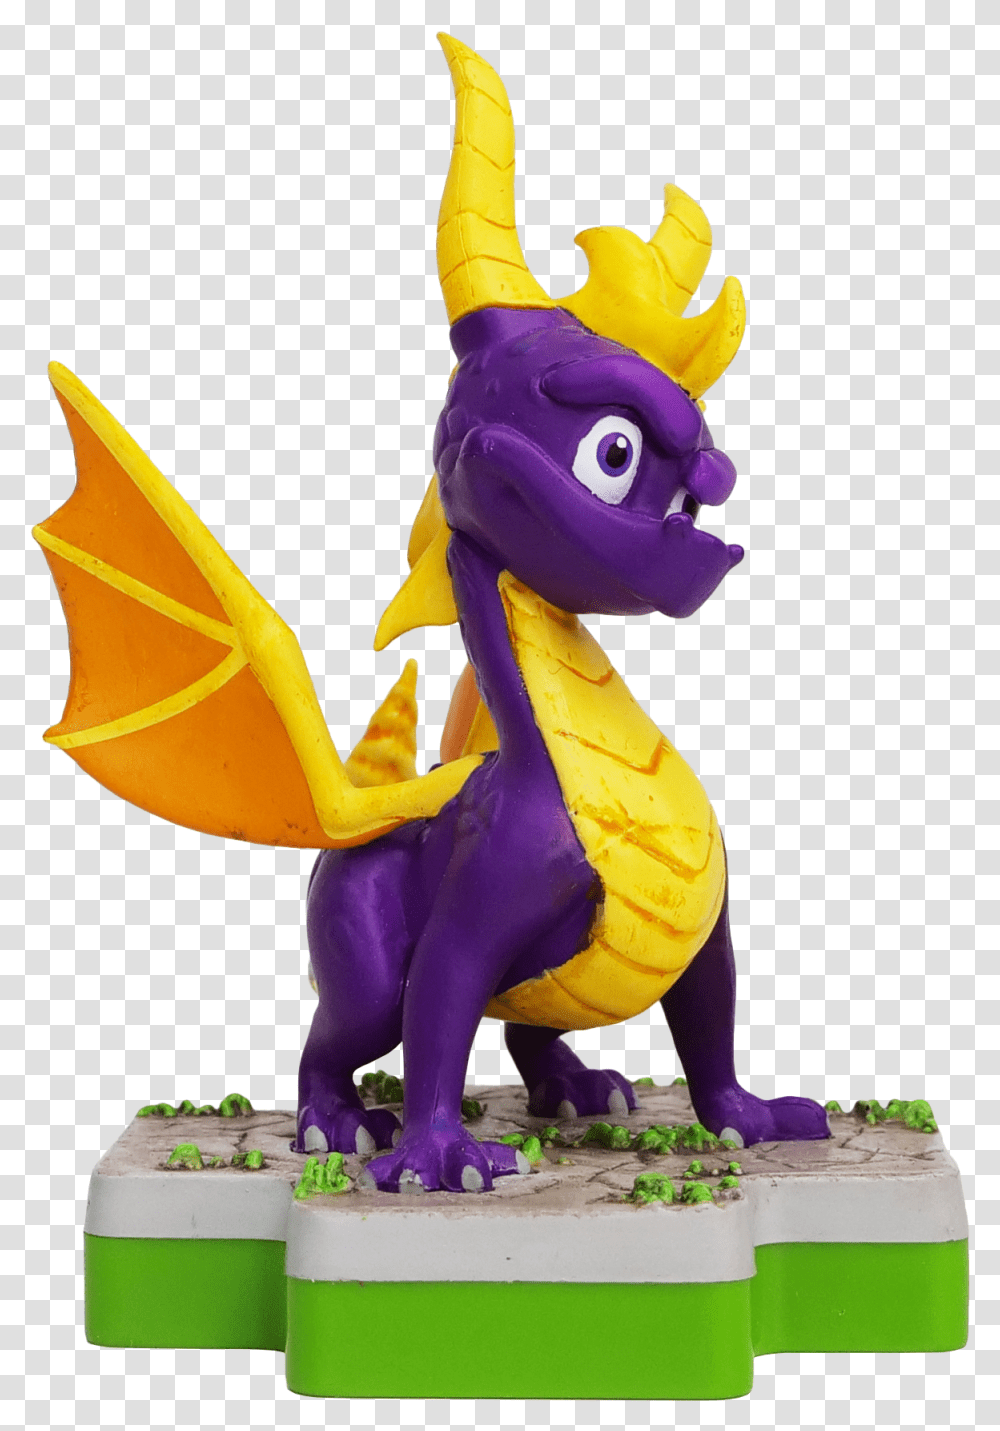 Spyro Totaku Collection Figurine Spyro The Dragon Totaku, Toy, Sweets, Food, Confectionery Transparent Png